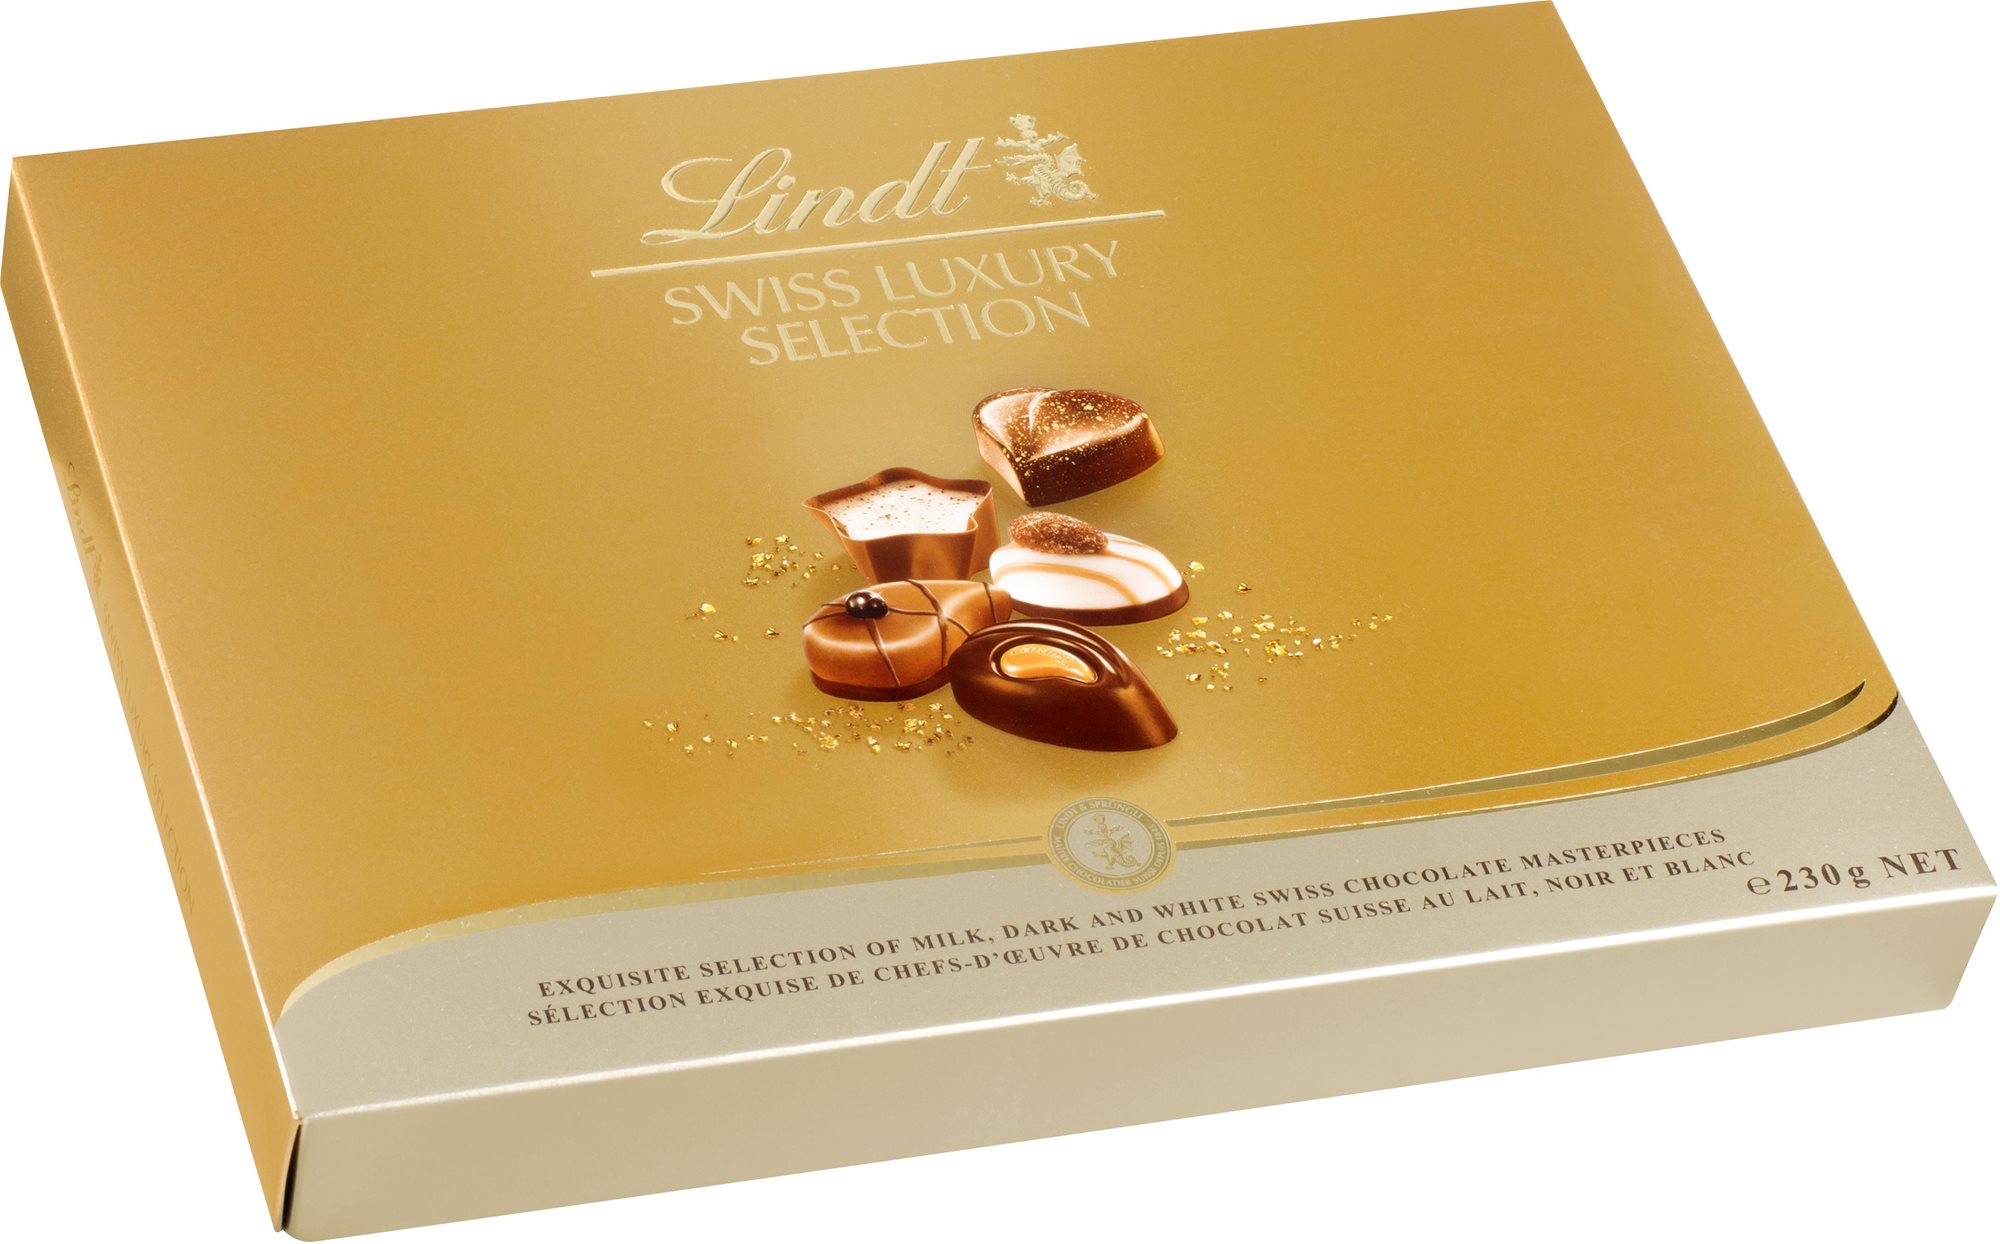 Bonbon LINDT Swiss Luxury Selection 230 g